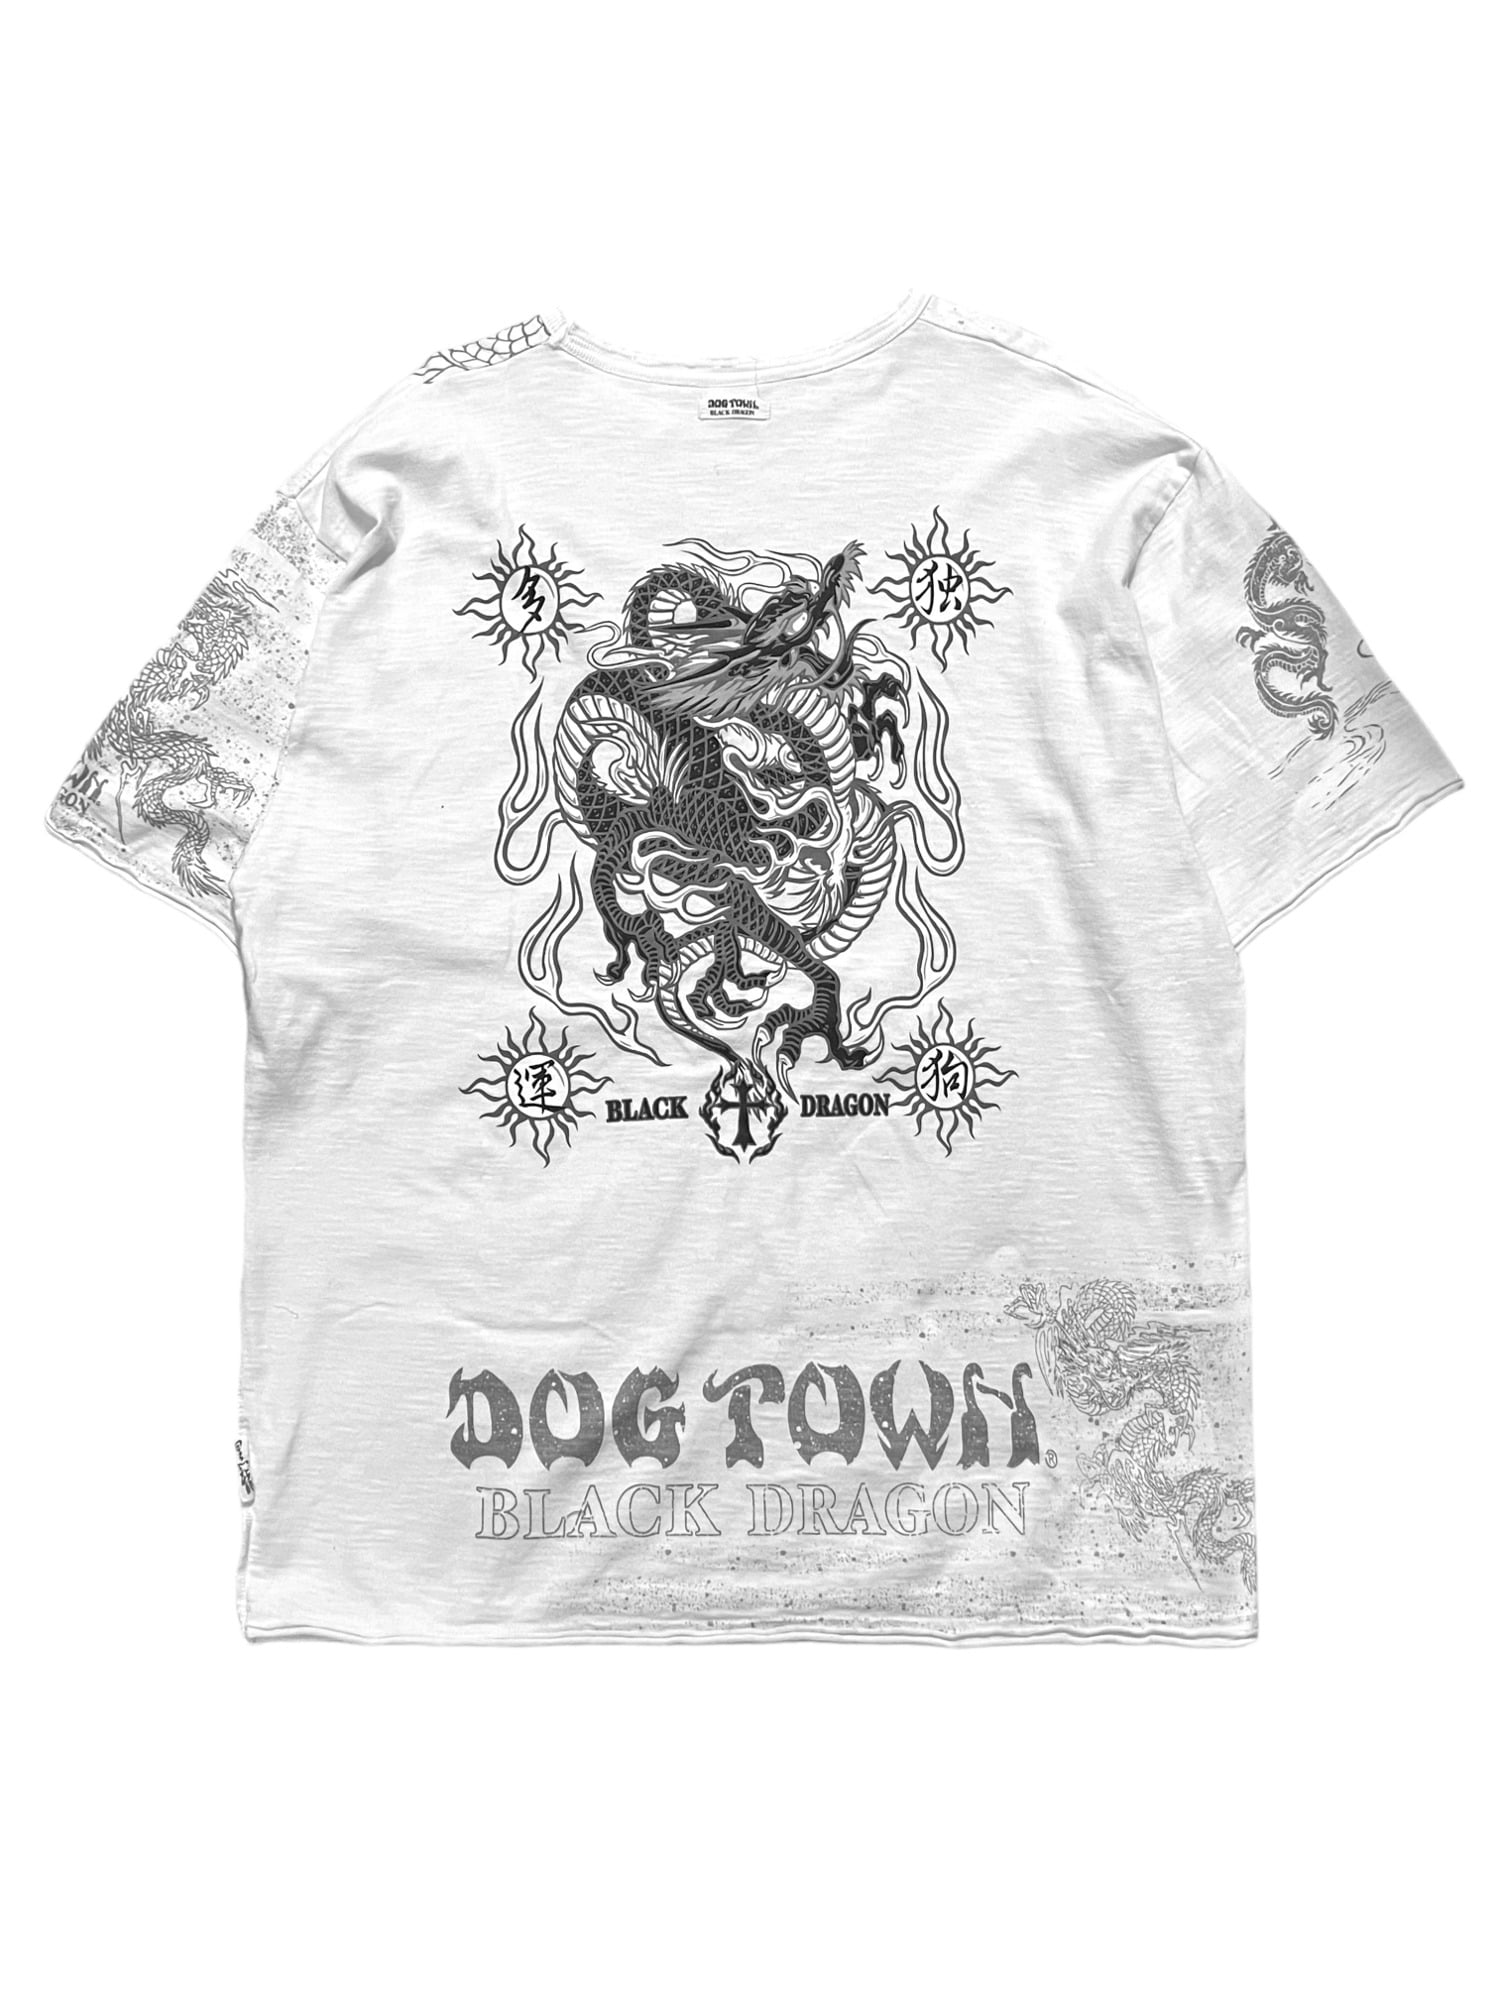 Dogtown Oriental Black Dragon Full Printing Overfit 1/2 T-Shirts